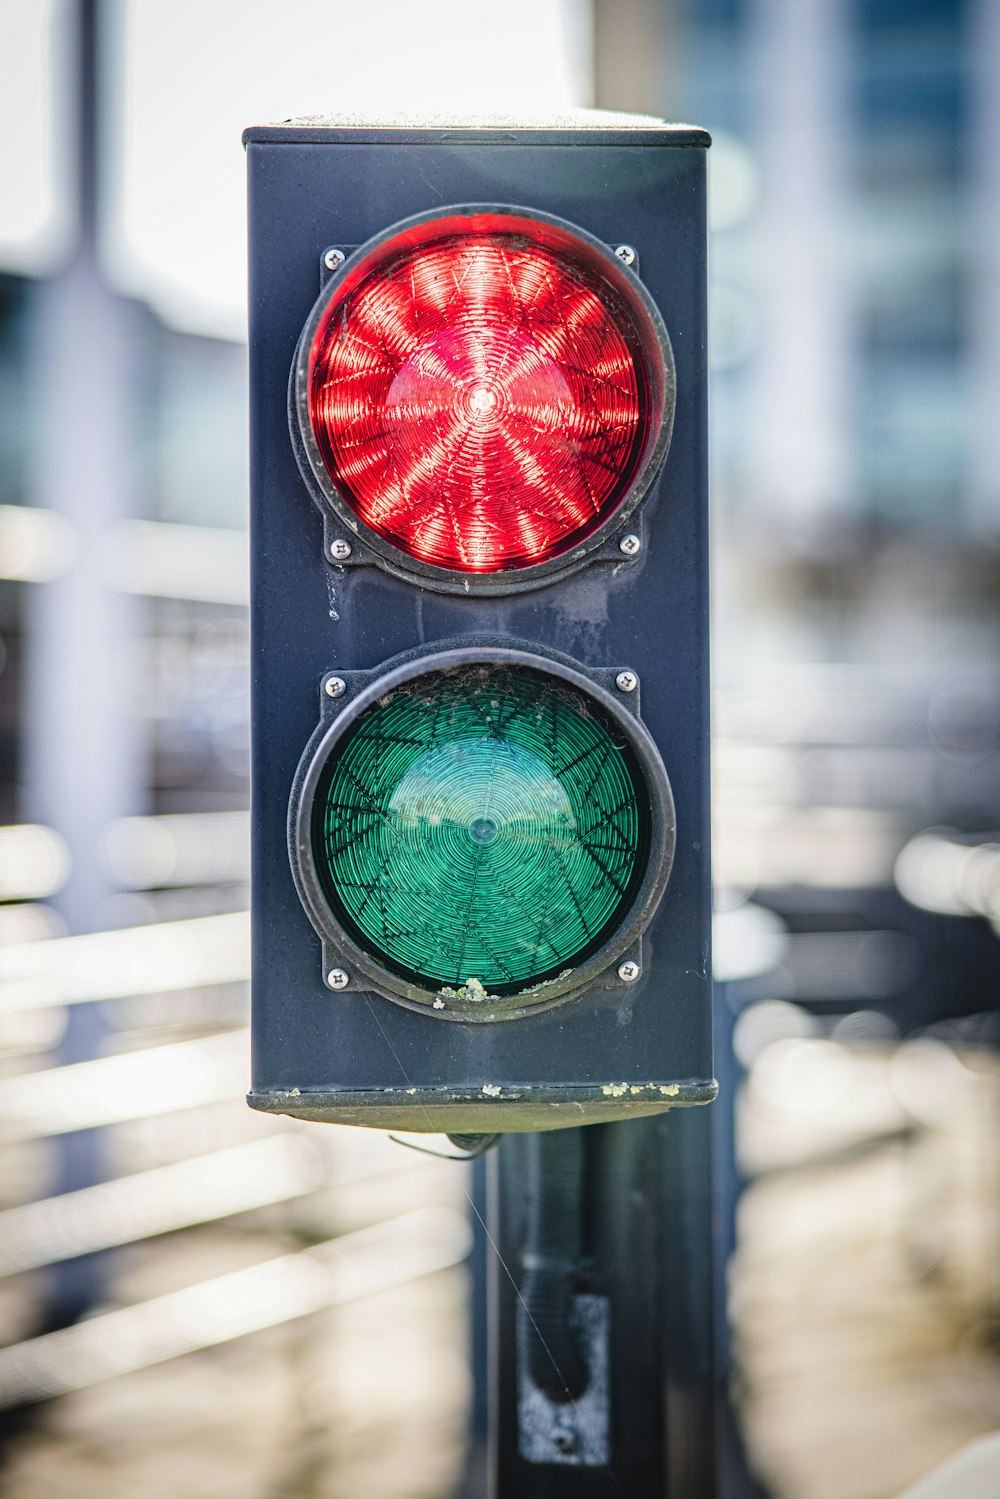 black traffic light with red light